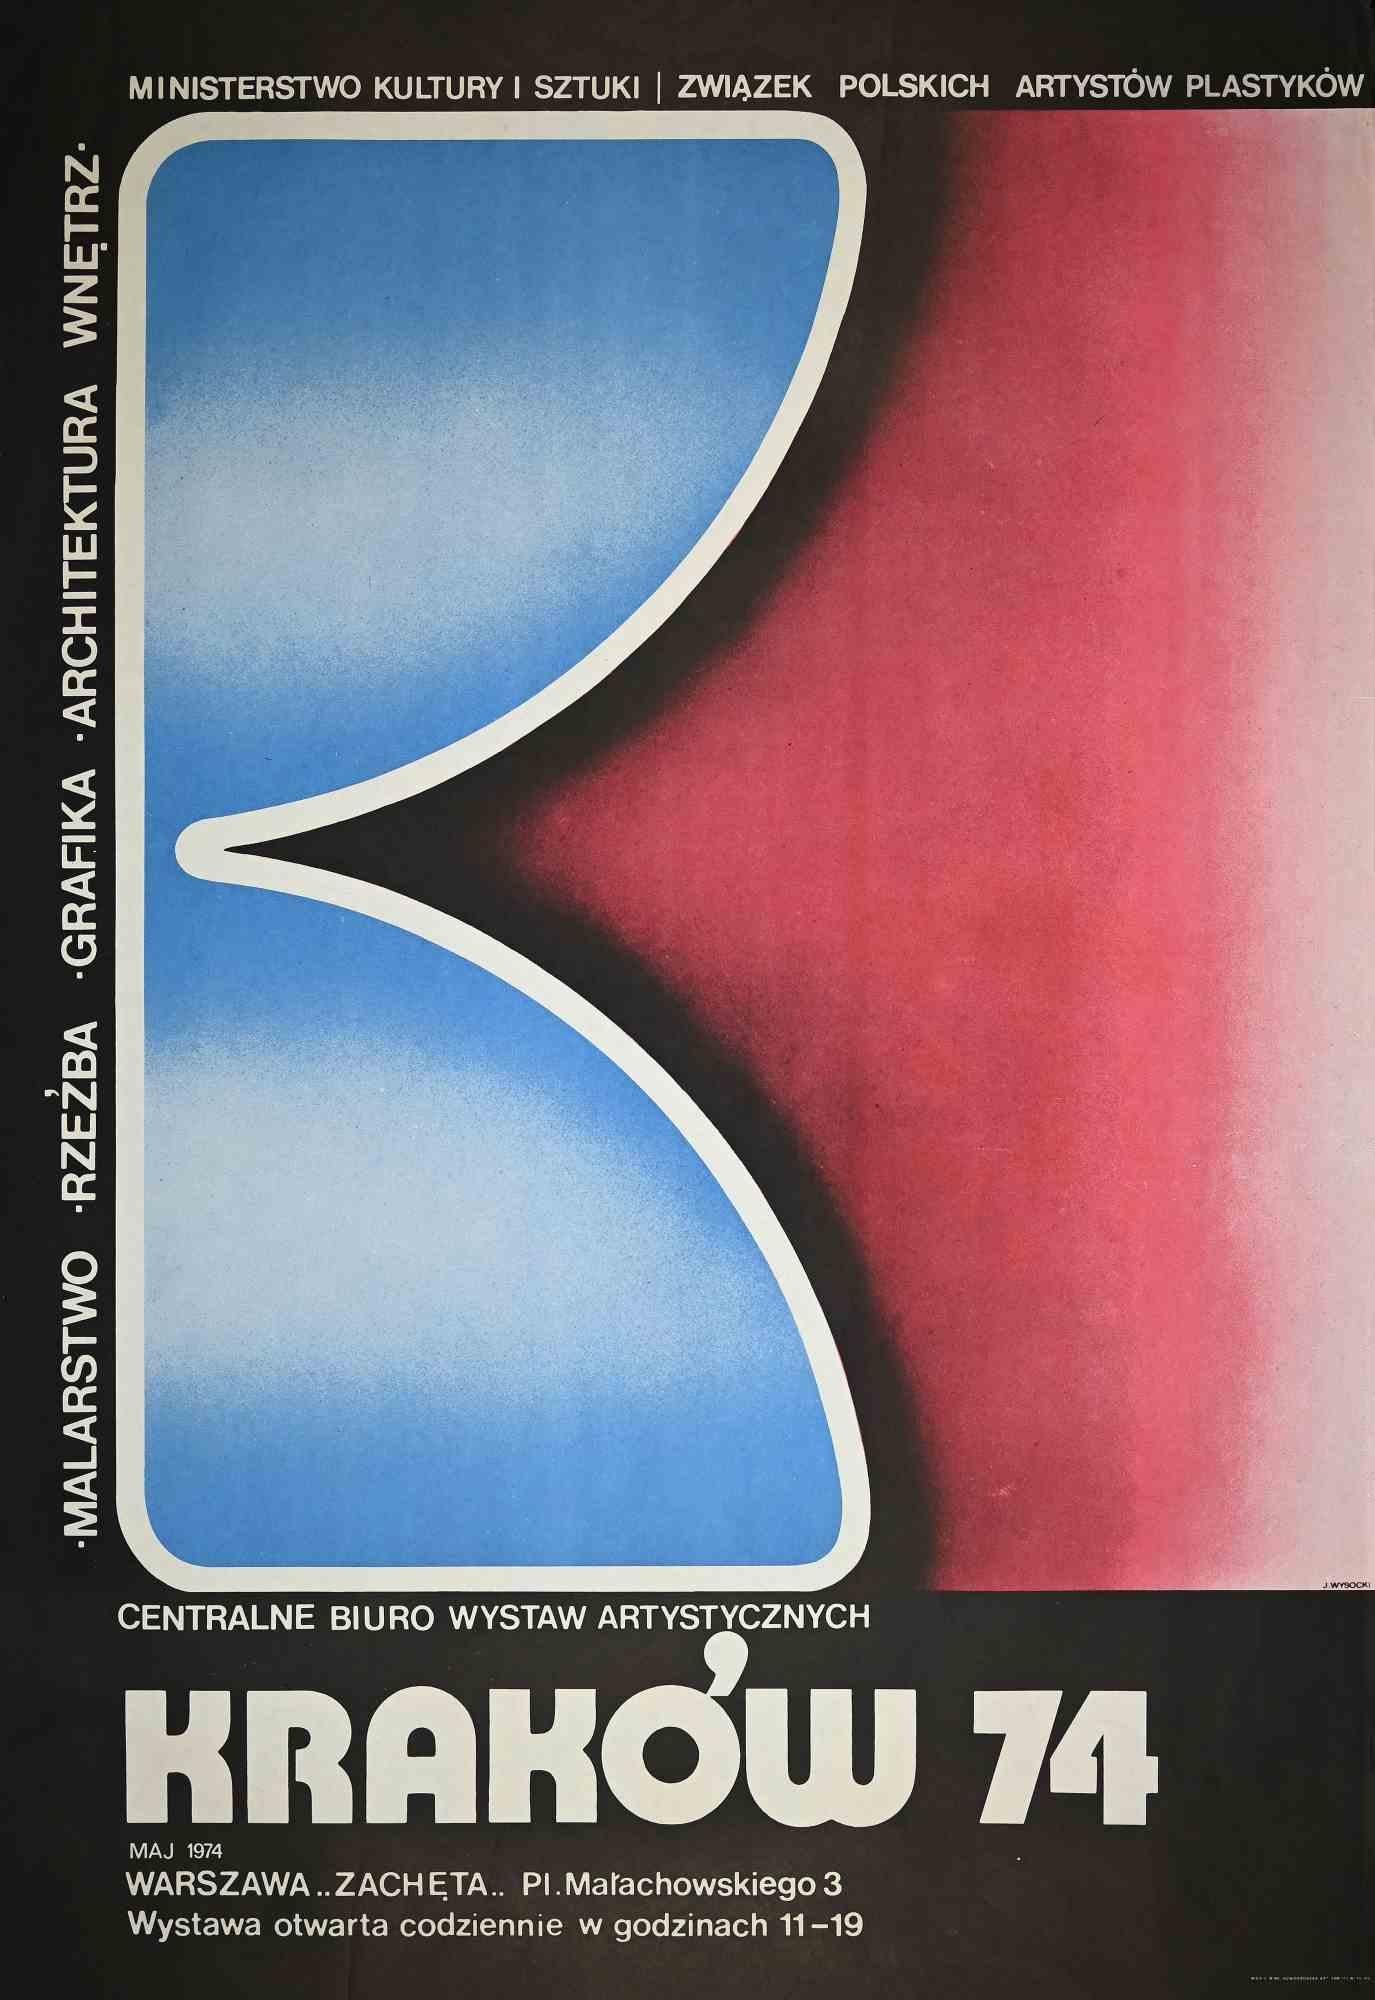 Krakow 74 - Vintage-Plakat von J. Wysocki - 1974